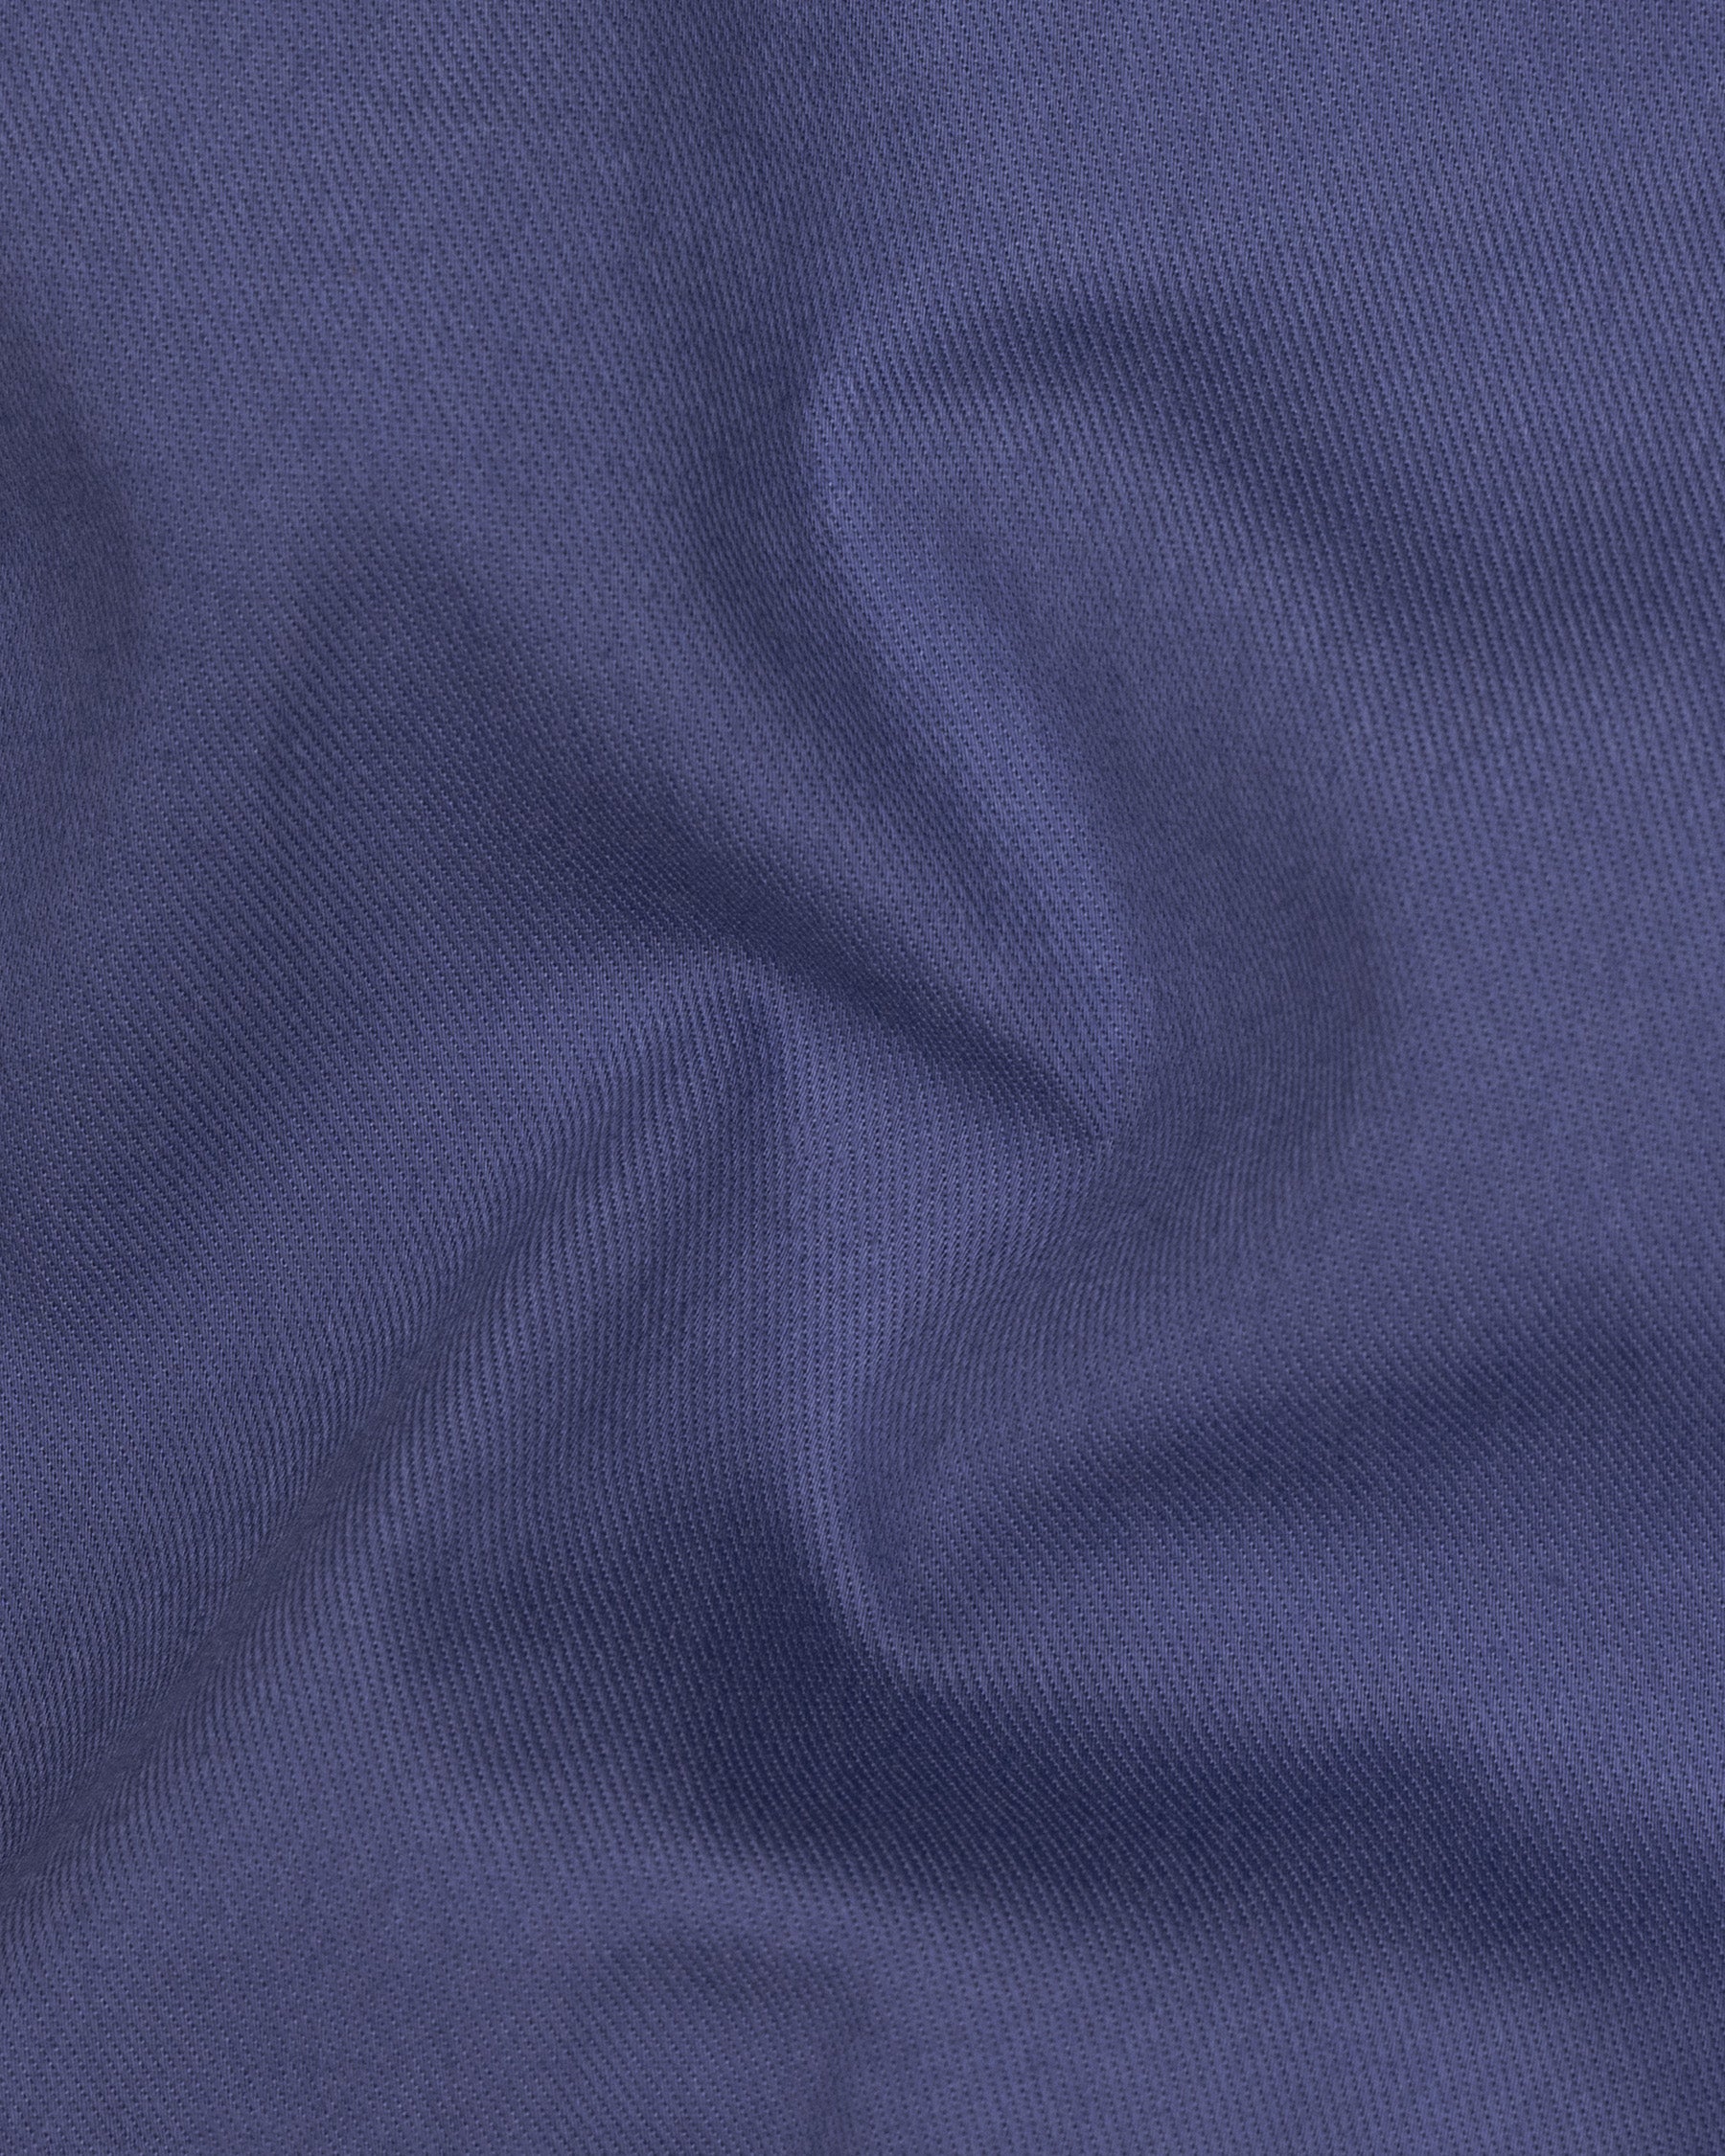 Kimberly Blue Premium Cotton Sports Waistcoat V1538-36, V1538-38, V1538-40, V1538-42, V1538-44, V1538-46, V1538-48, V1538-50, V1538-52, V1538-54, V1538-56, V1538-58, V1538-60